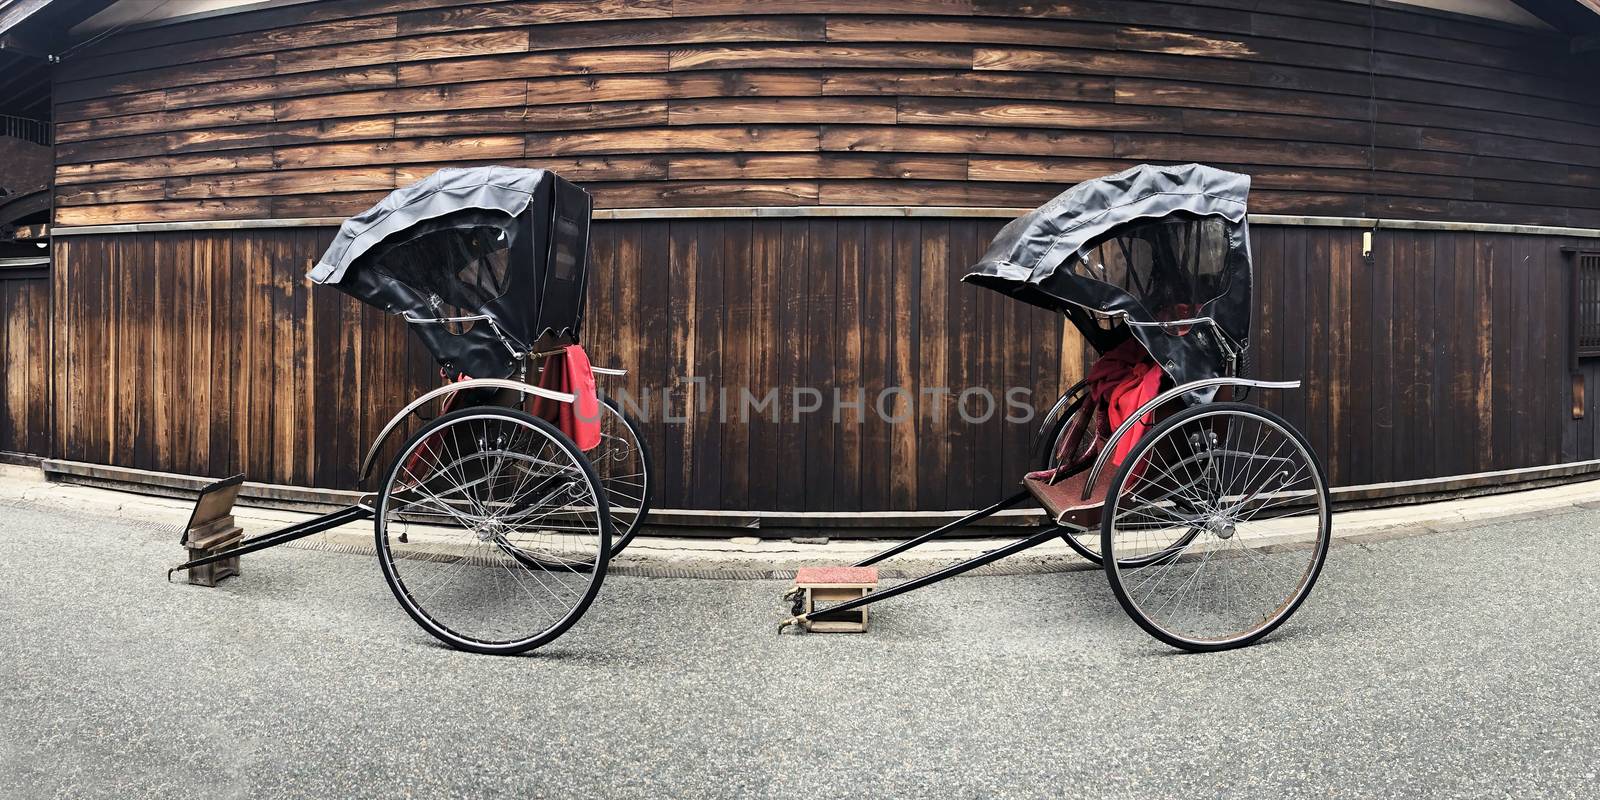 Ancient Japanese Tricycles at shopping street in takayama, Japan by Surasak